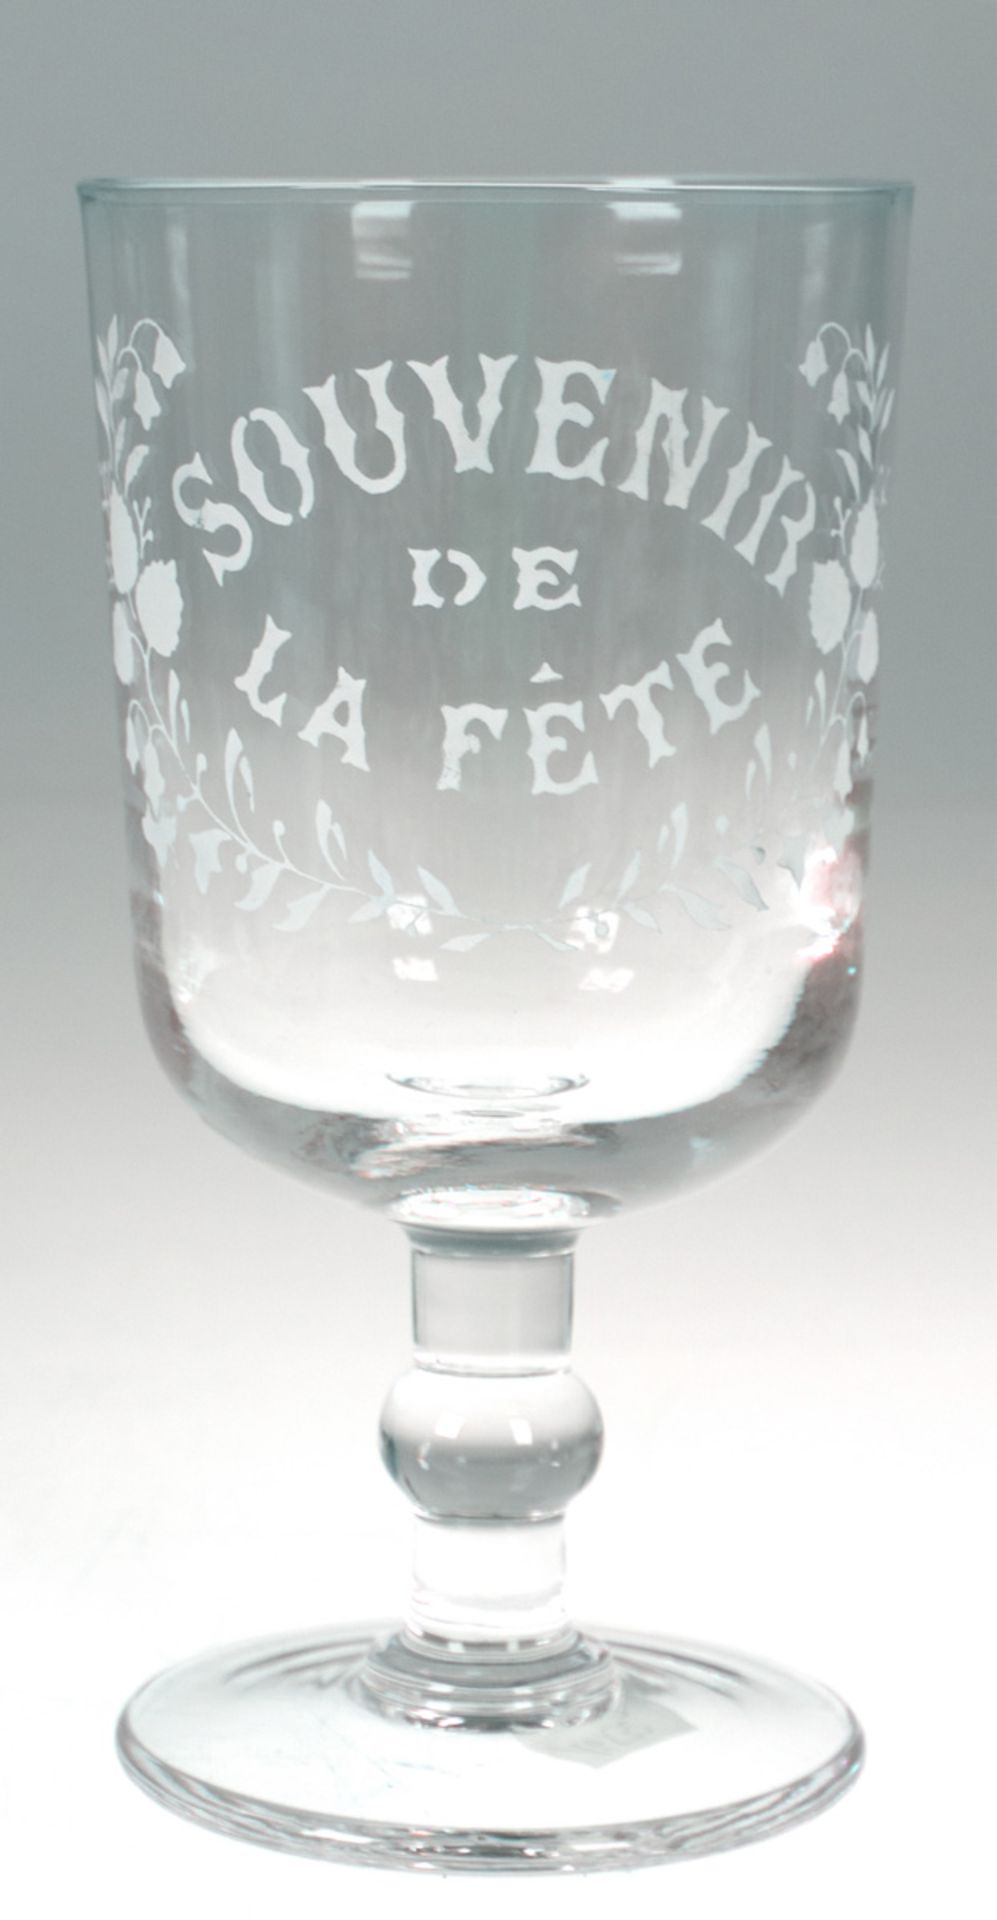 Französisches Souvenirglas, mundgeblasen, farblos mit Schriftzug "Souvenir de la Féte"